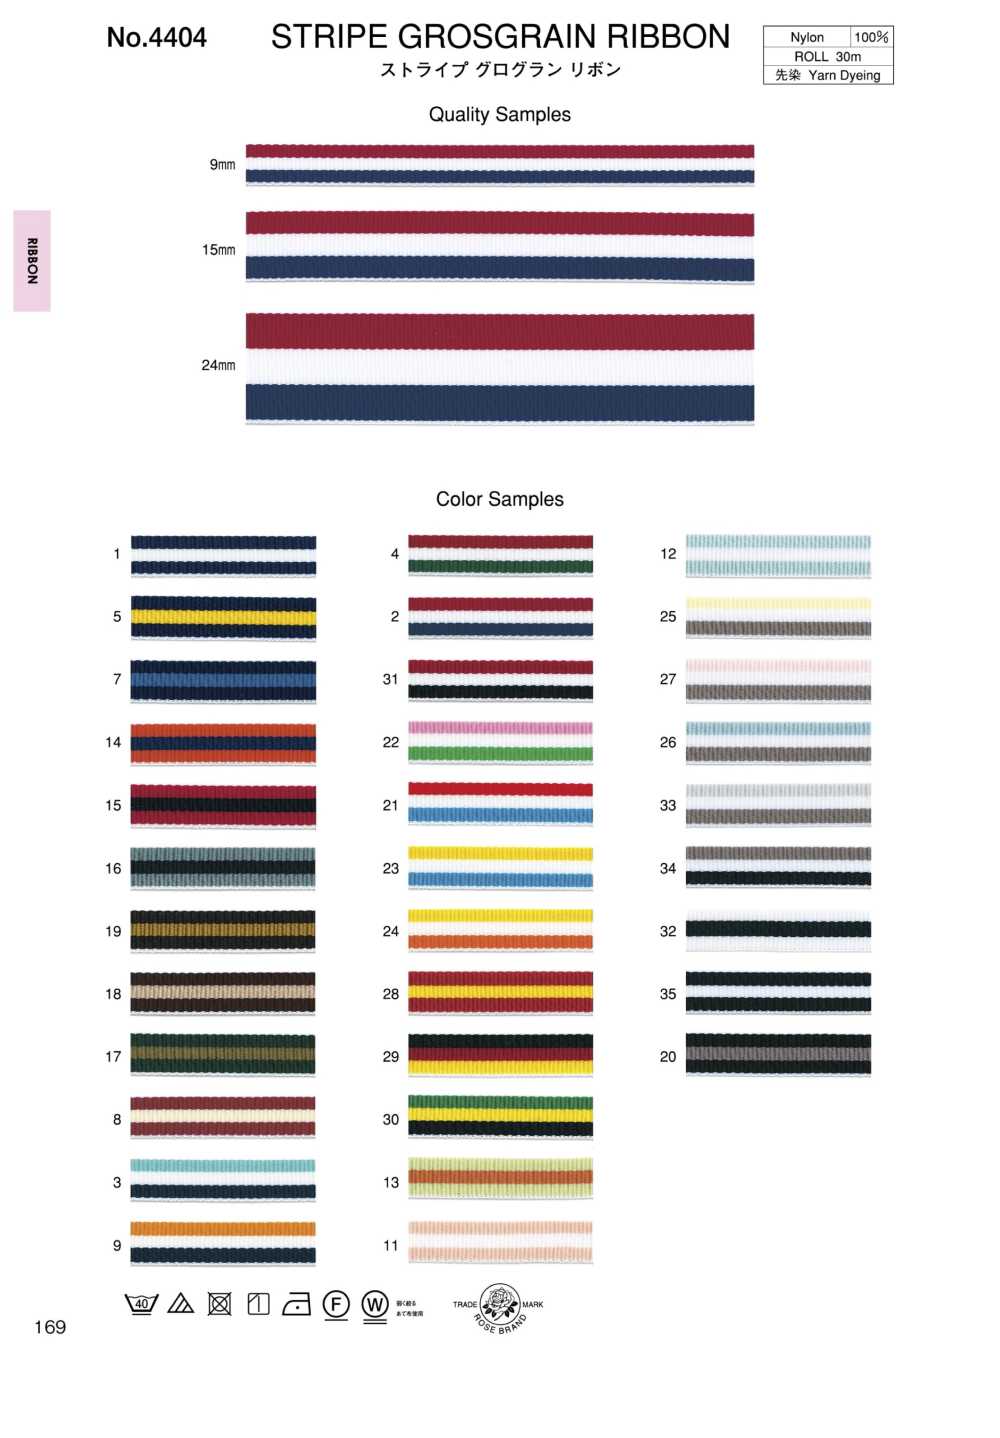 4404 Striped Grosgrain Ribbon[Ribbon Tape Cord] ROSE BRAND (Marushin)